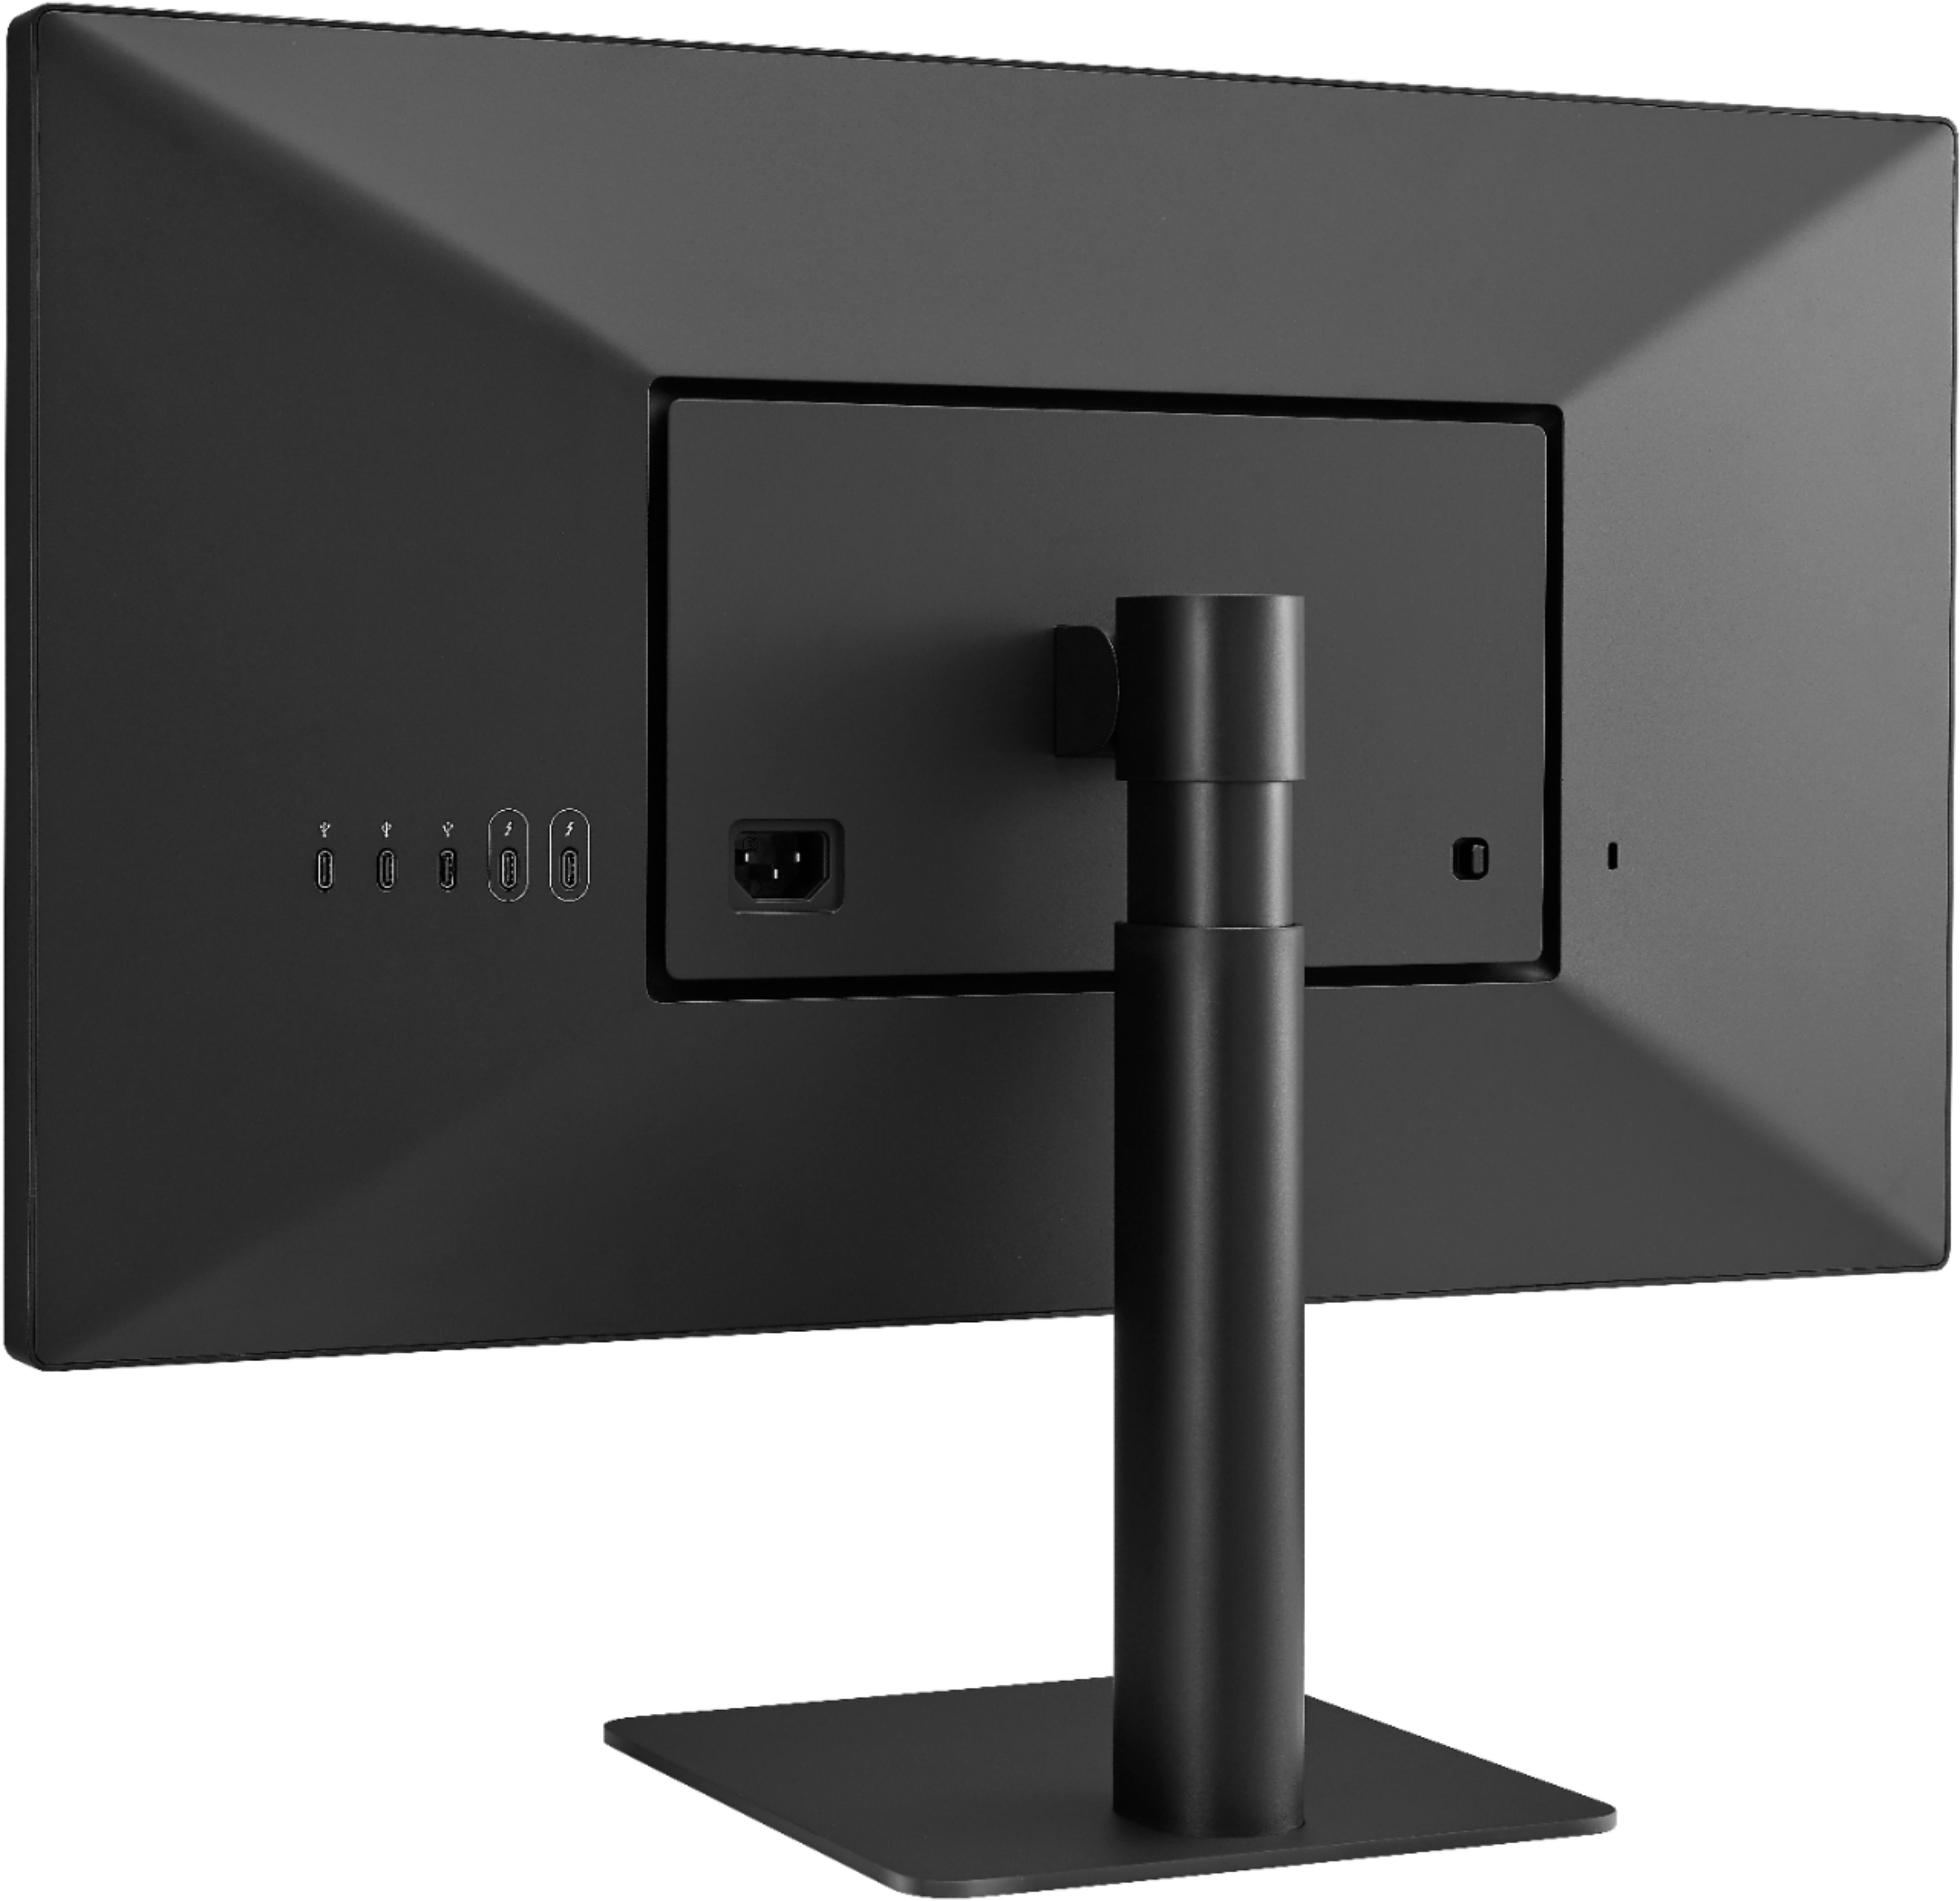 LG 24UD58-B Monitor 24 4K Ultrafine (3840 x 2160) IPS Display, FreeSync,  On-Screen Control, Screen Split 2.0, Game Mode, Black Stabilizer - Black